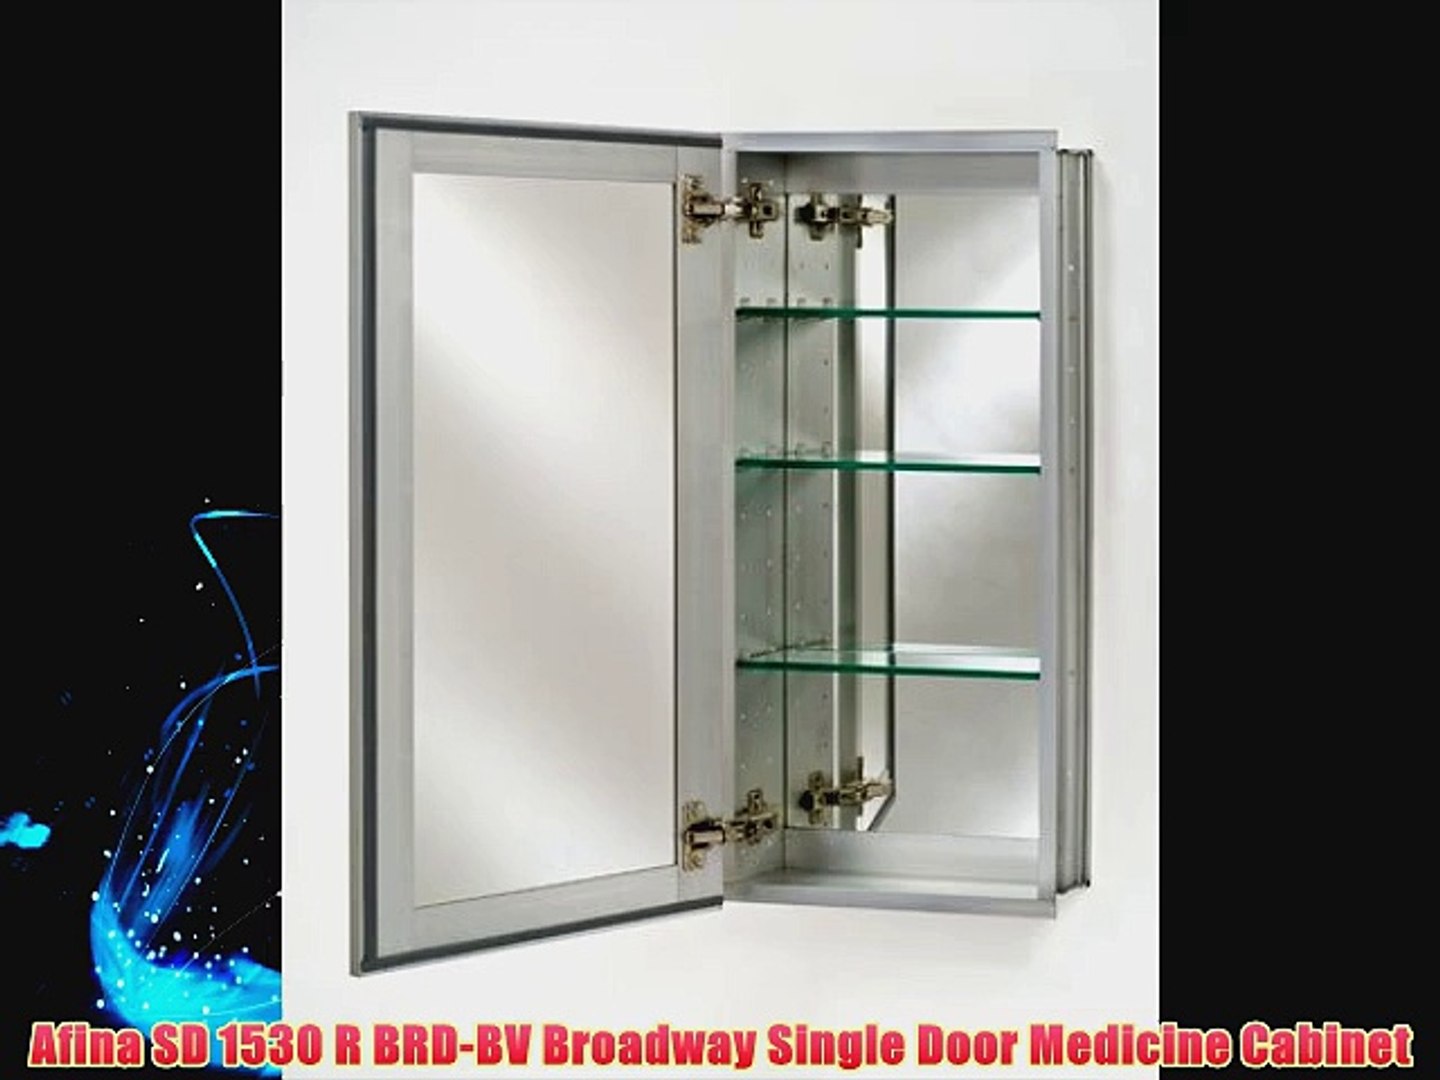 Afina Sd 1530 R Brd Bv Broadway Single Door Medicine Cabinet